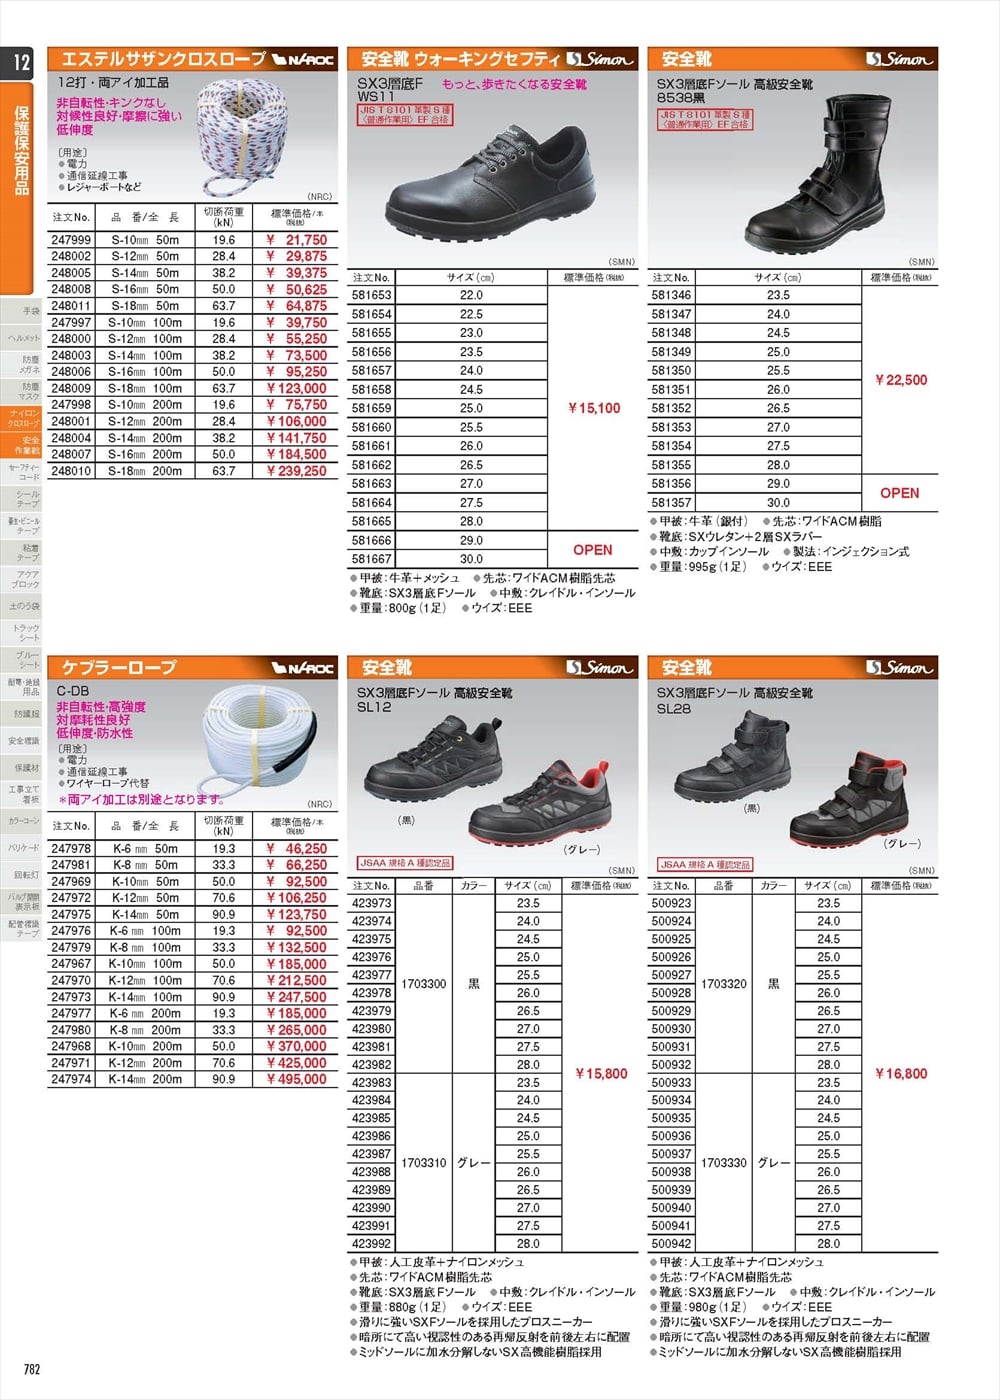 1703320 (500929)】 《KJK》 シモン SL28黒 プロスニーカー安全靴26.5